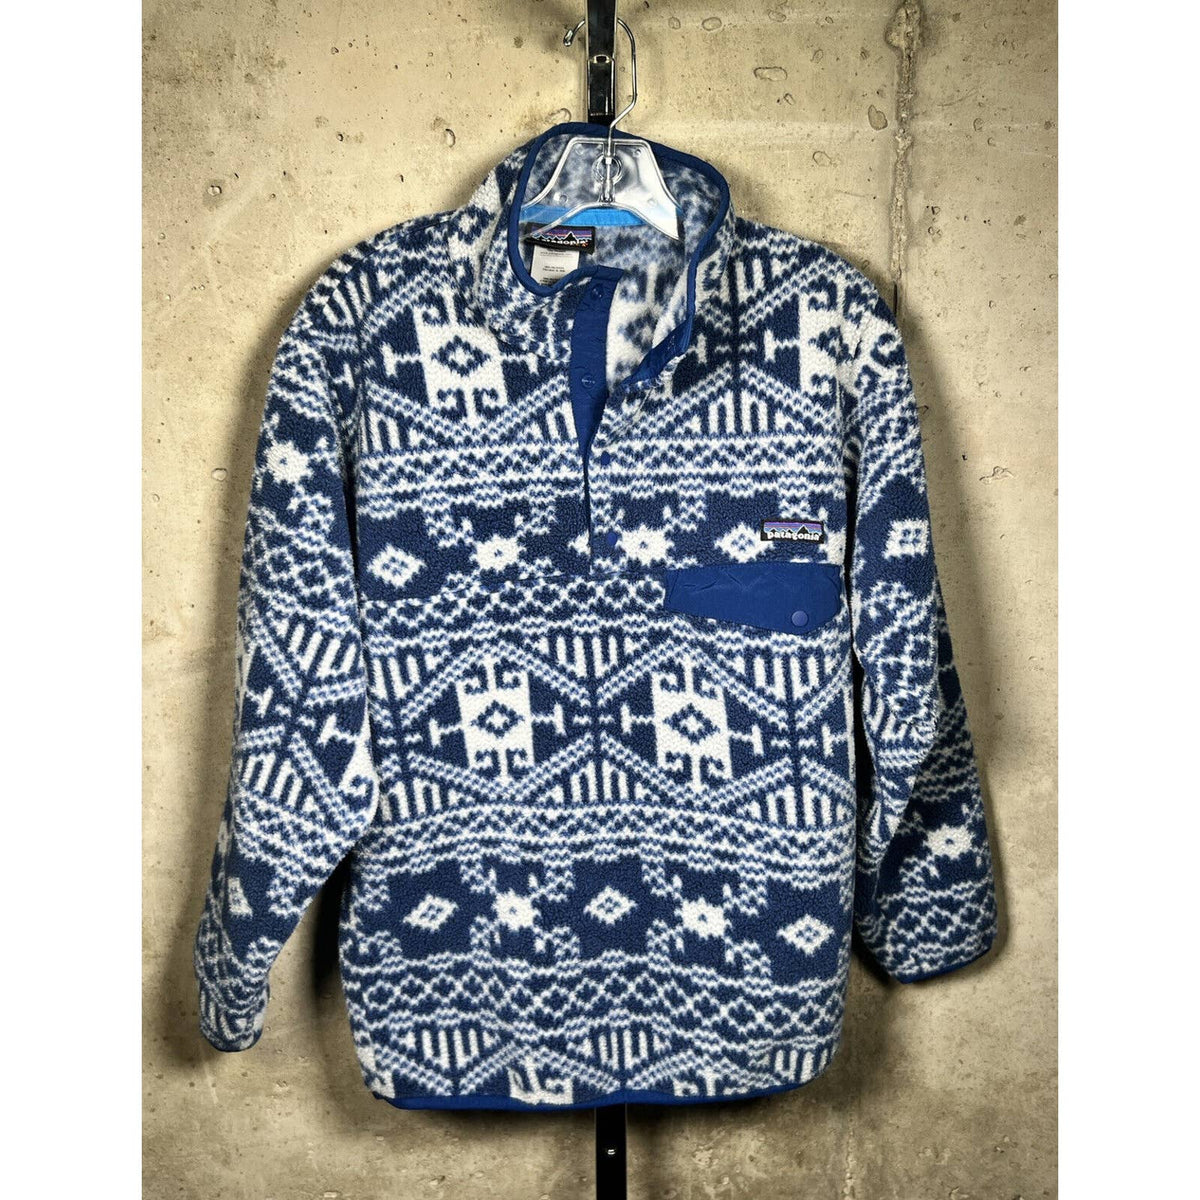 Patagonia Synchilla Blue and White Fleece Sweater Sz.XS